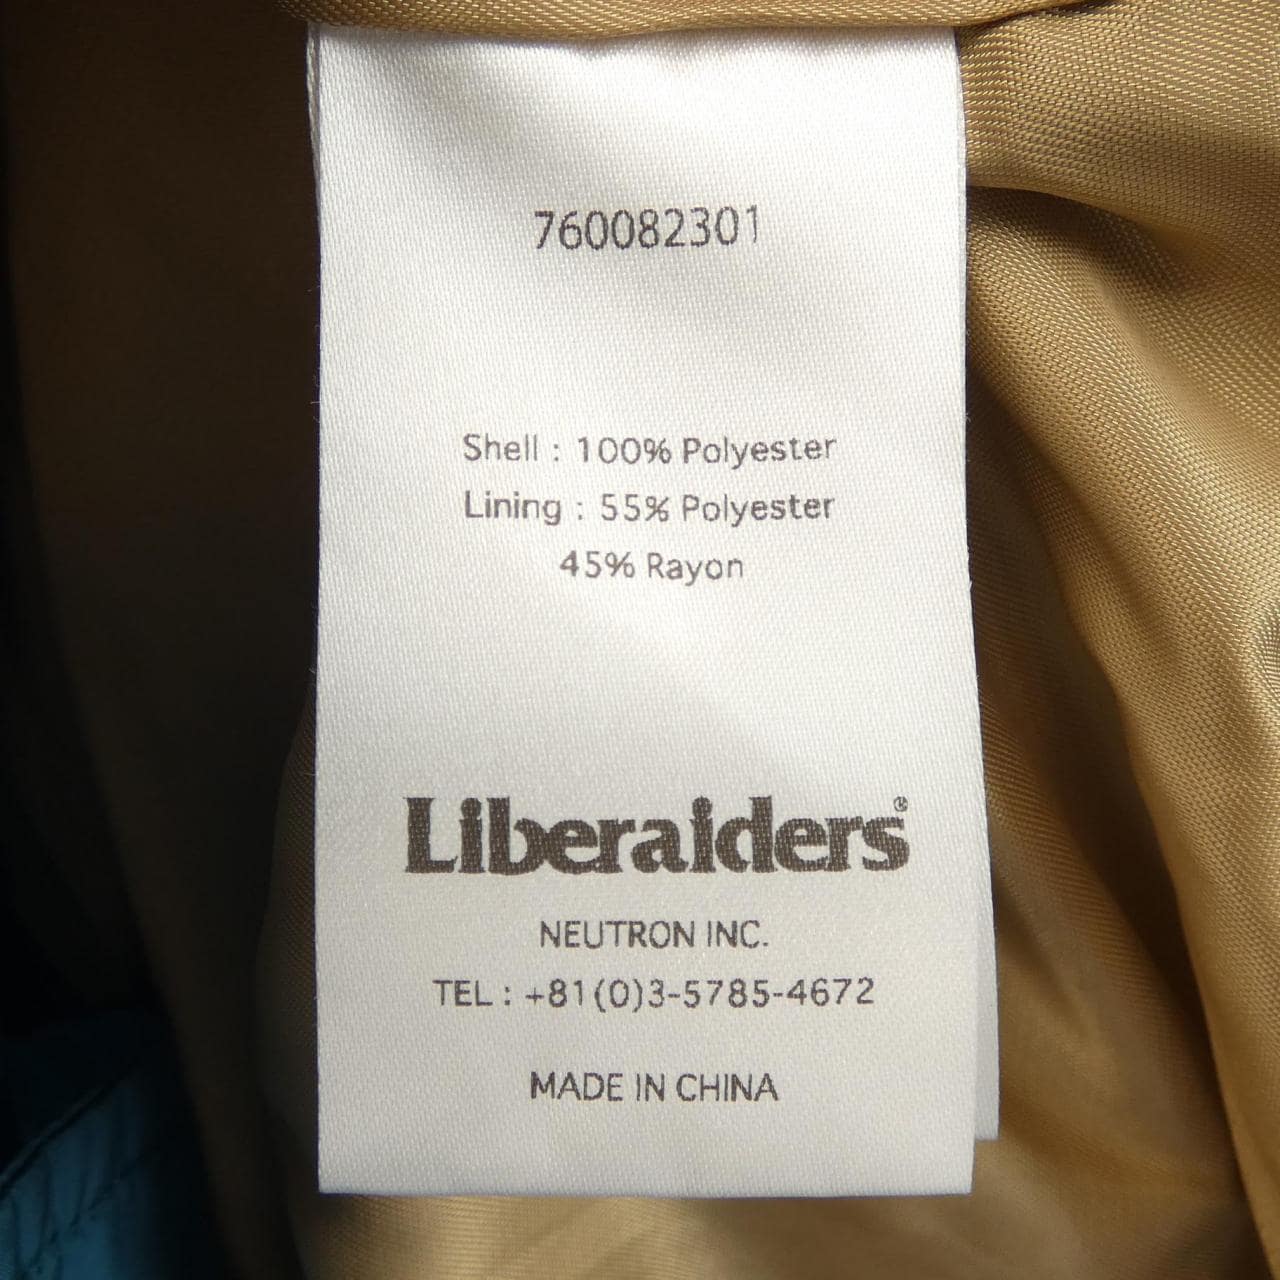 Liberaiders ジャケット